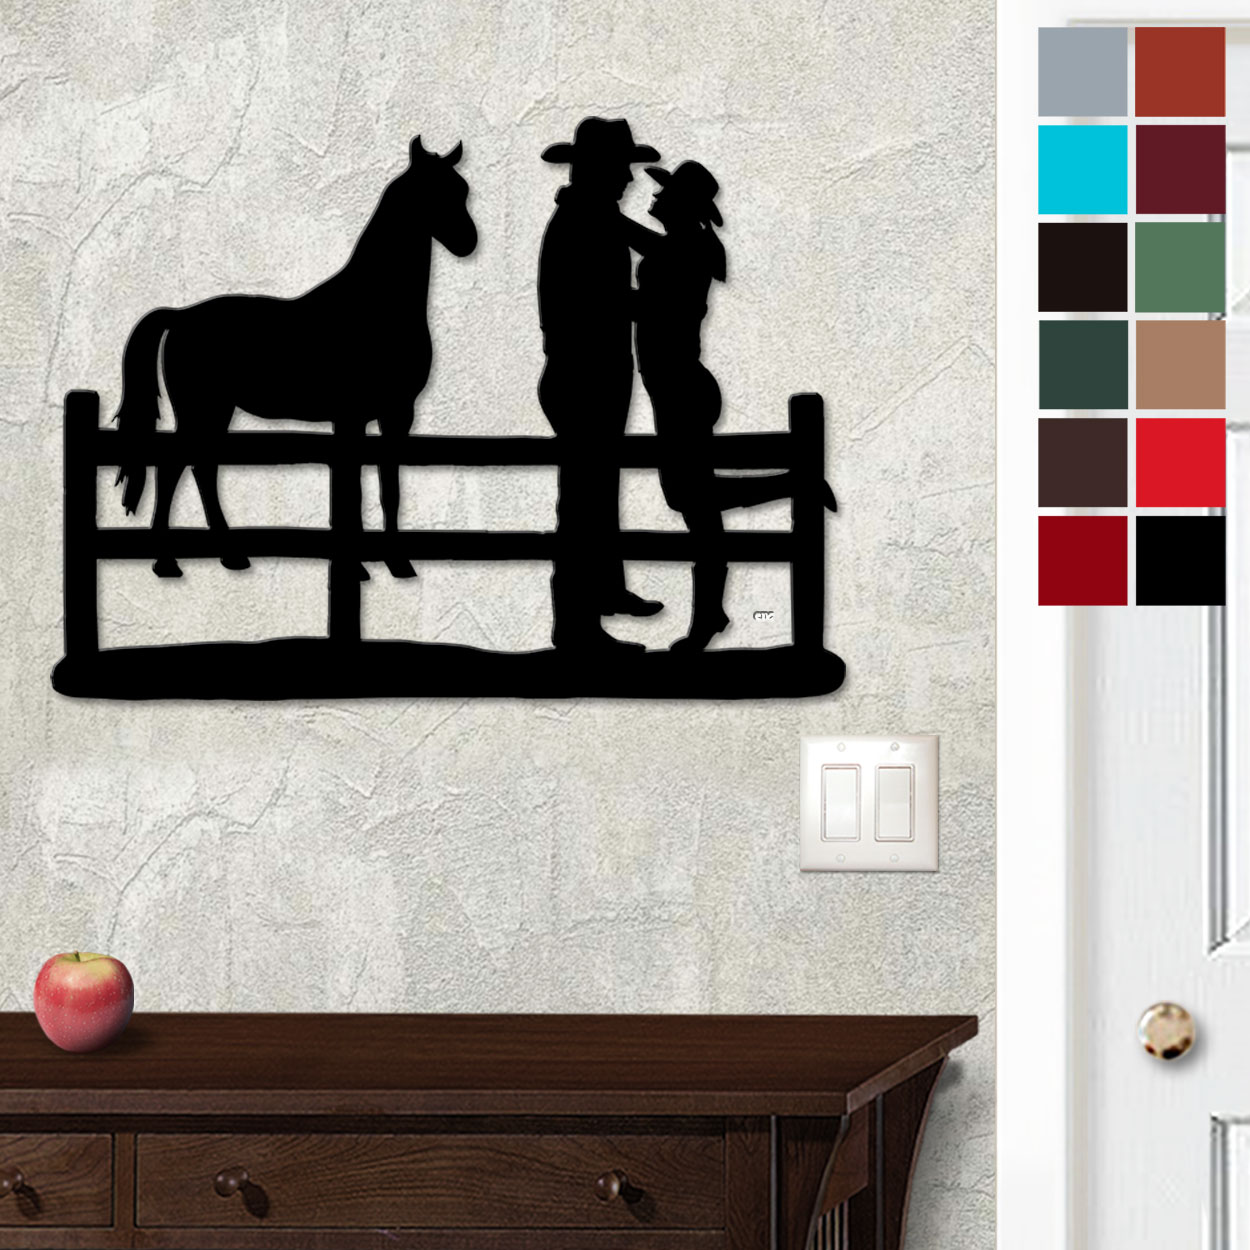 625010 - 18 or 24in Metal Wall Art - Cowboy Corral - Choose Color